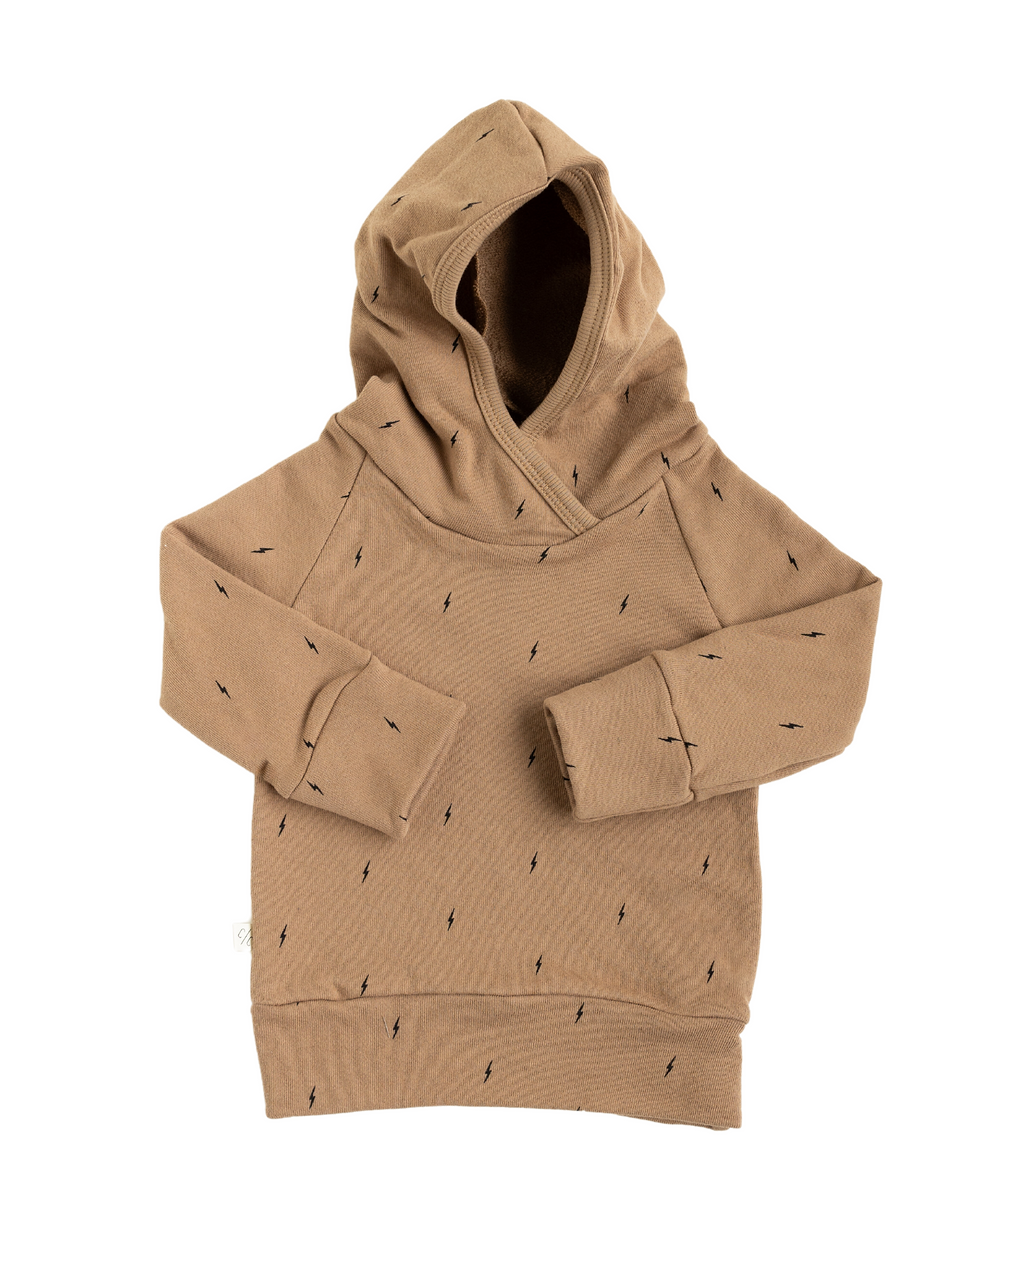 trademark raglan hoodie - bolts on kraft